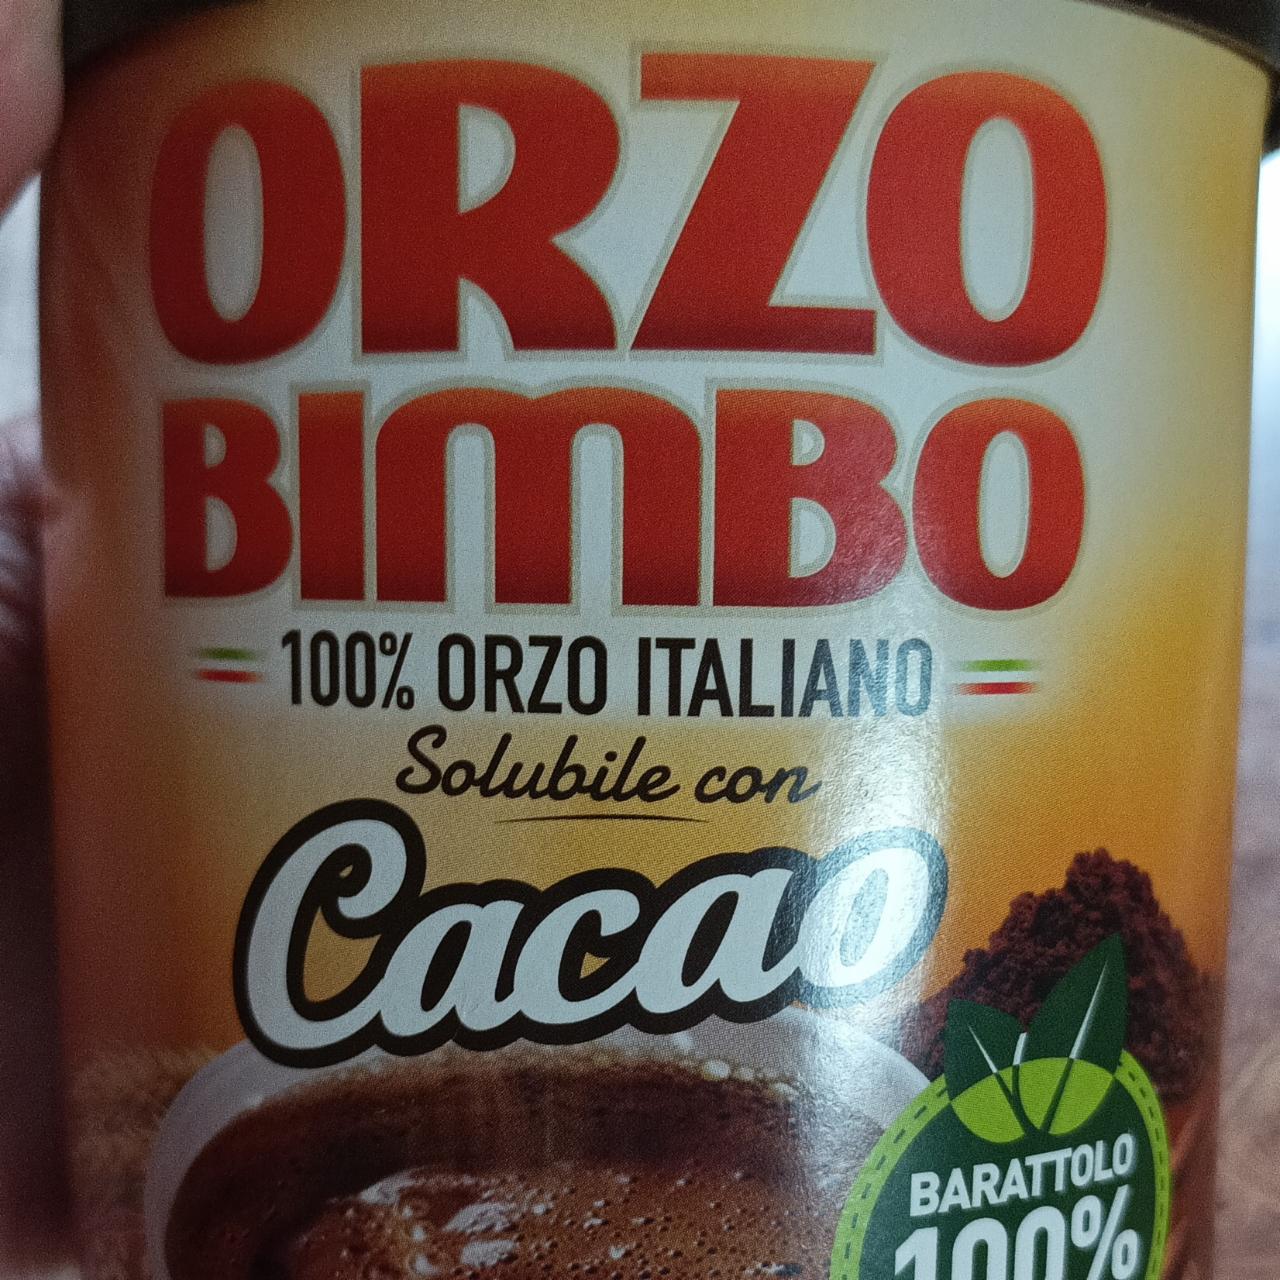 Фото - Cacao Orzo bimbo